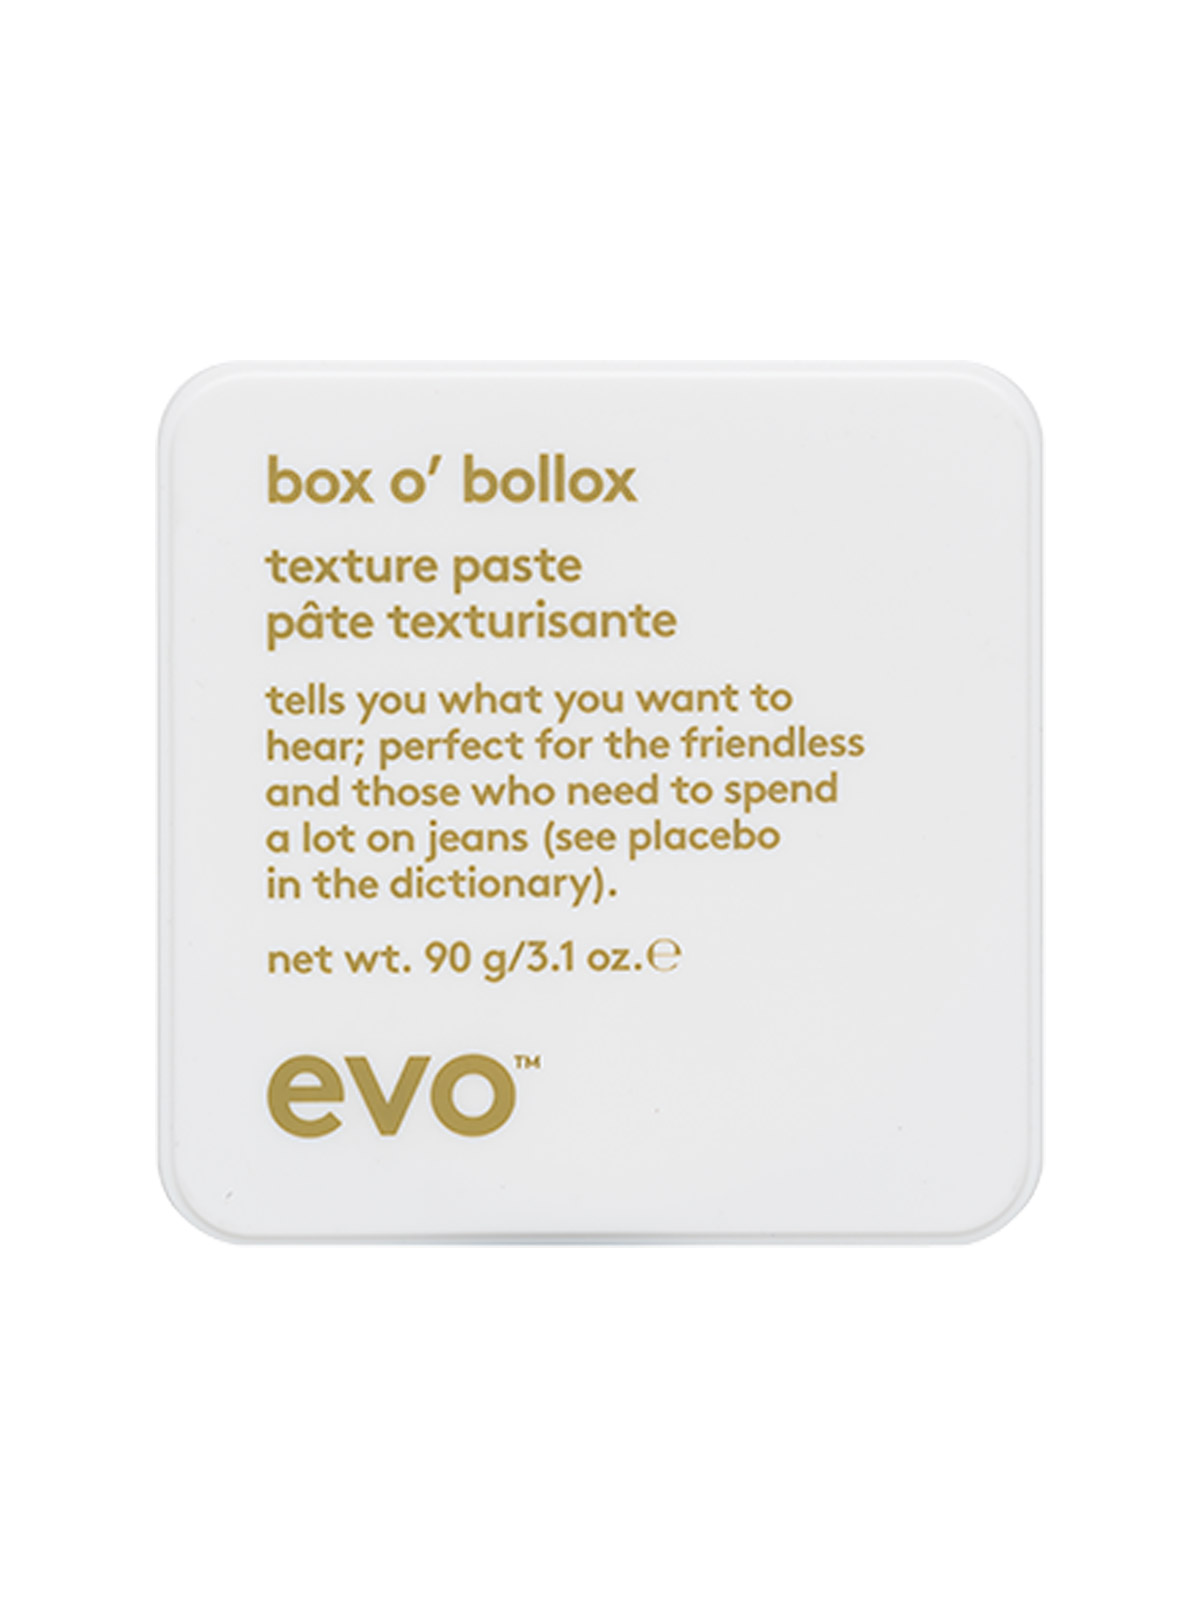 EVO Box o’ Bollox Texture Paste